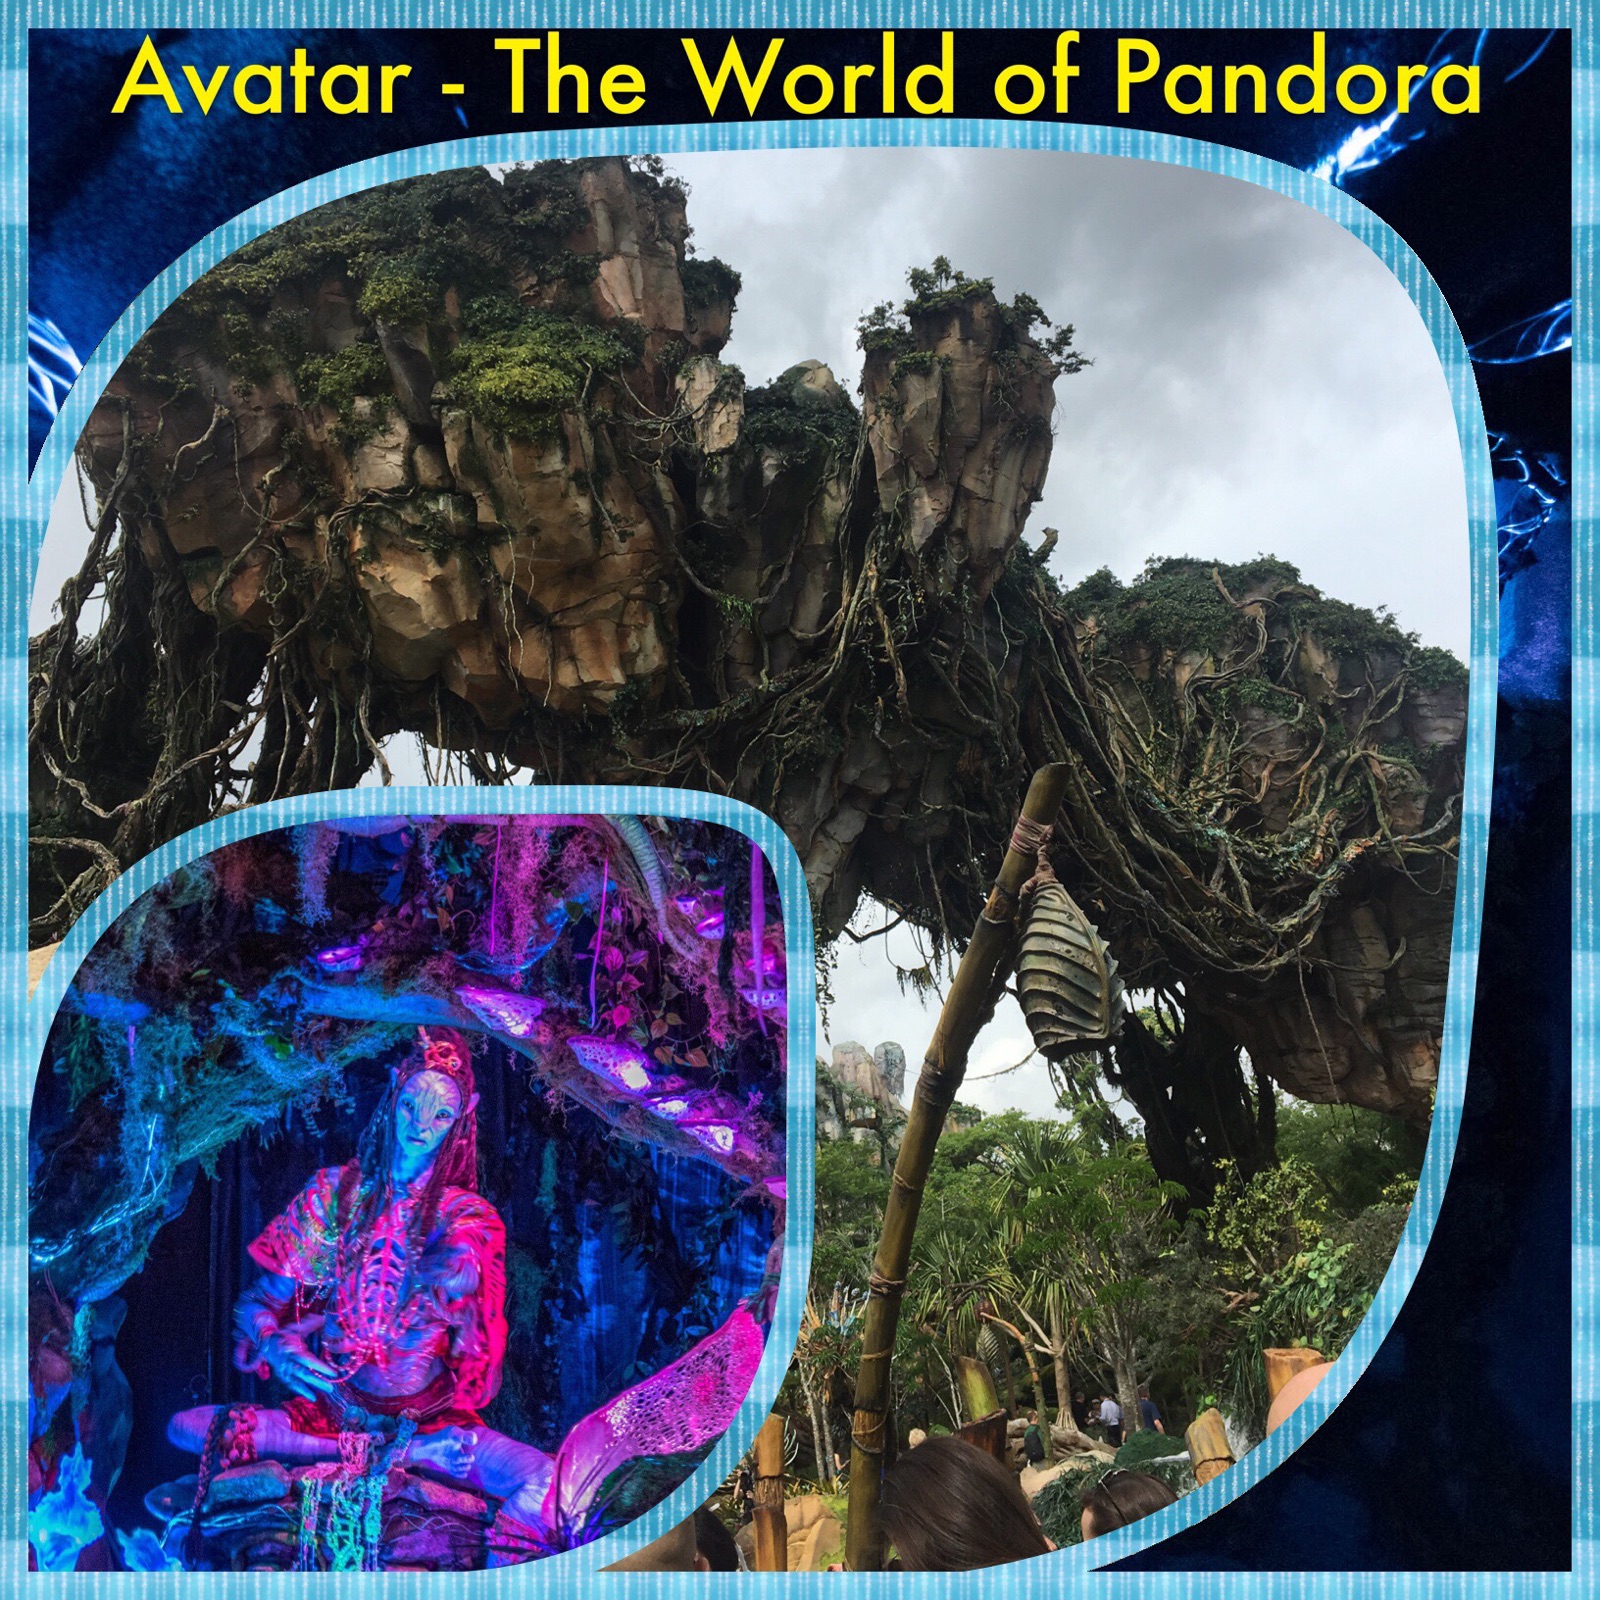 Pandora - World of Avatar Review / Disney's Animal Kingdom — Build A Better  Mouse Trip